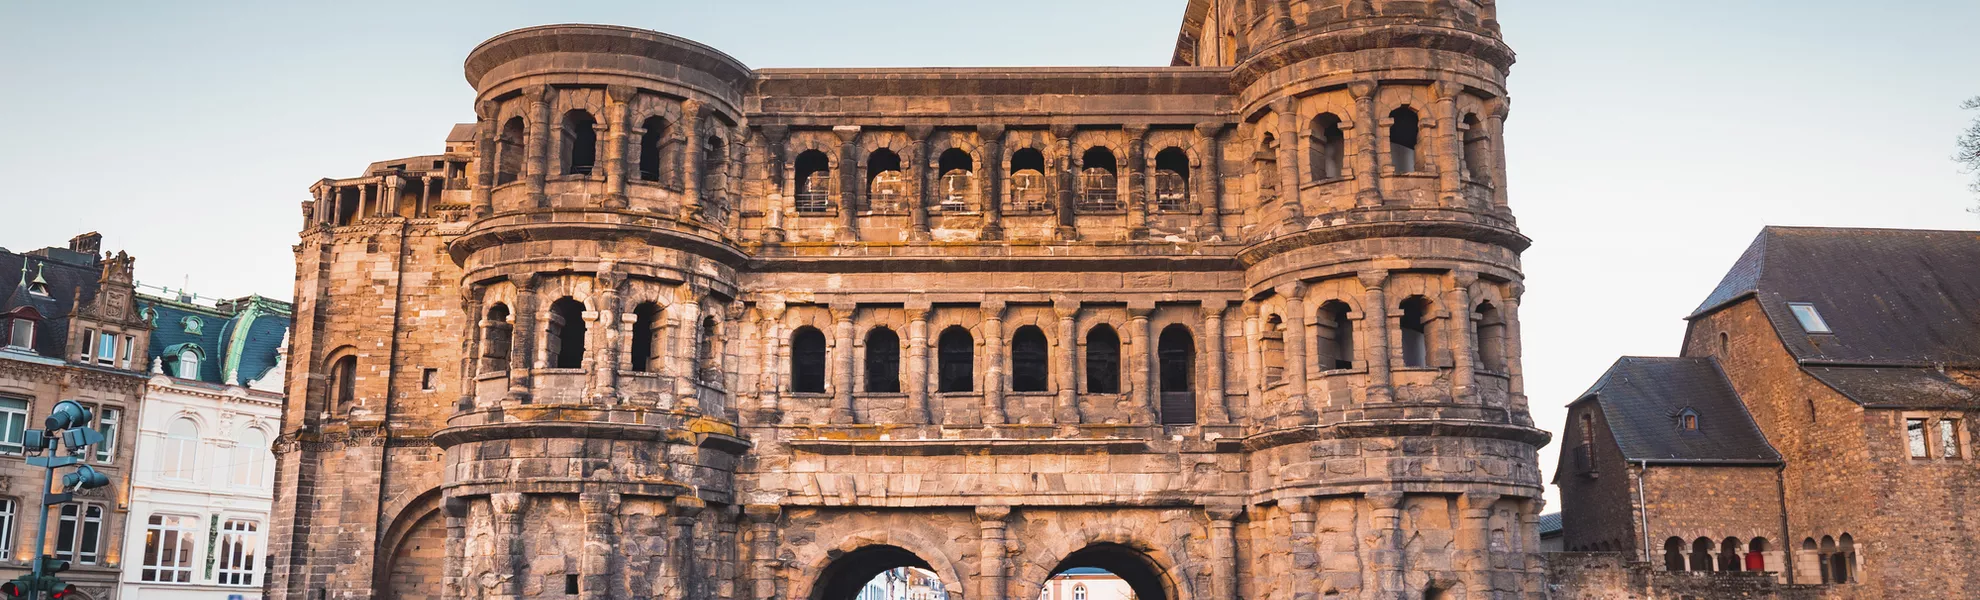 Porta Nigra, Trier - © Getty Images/iStockphoto